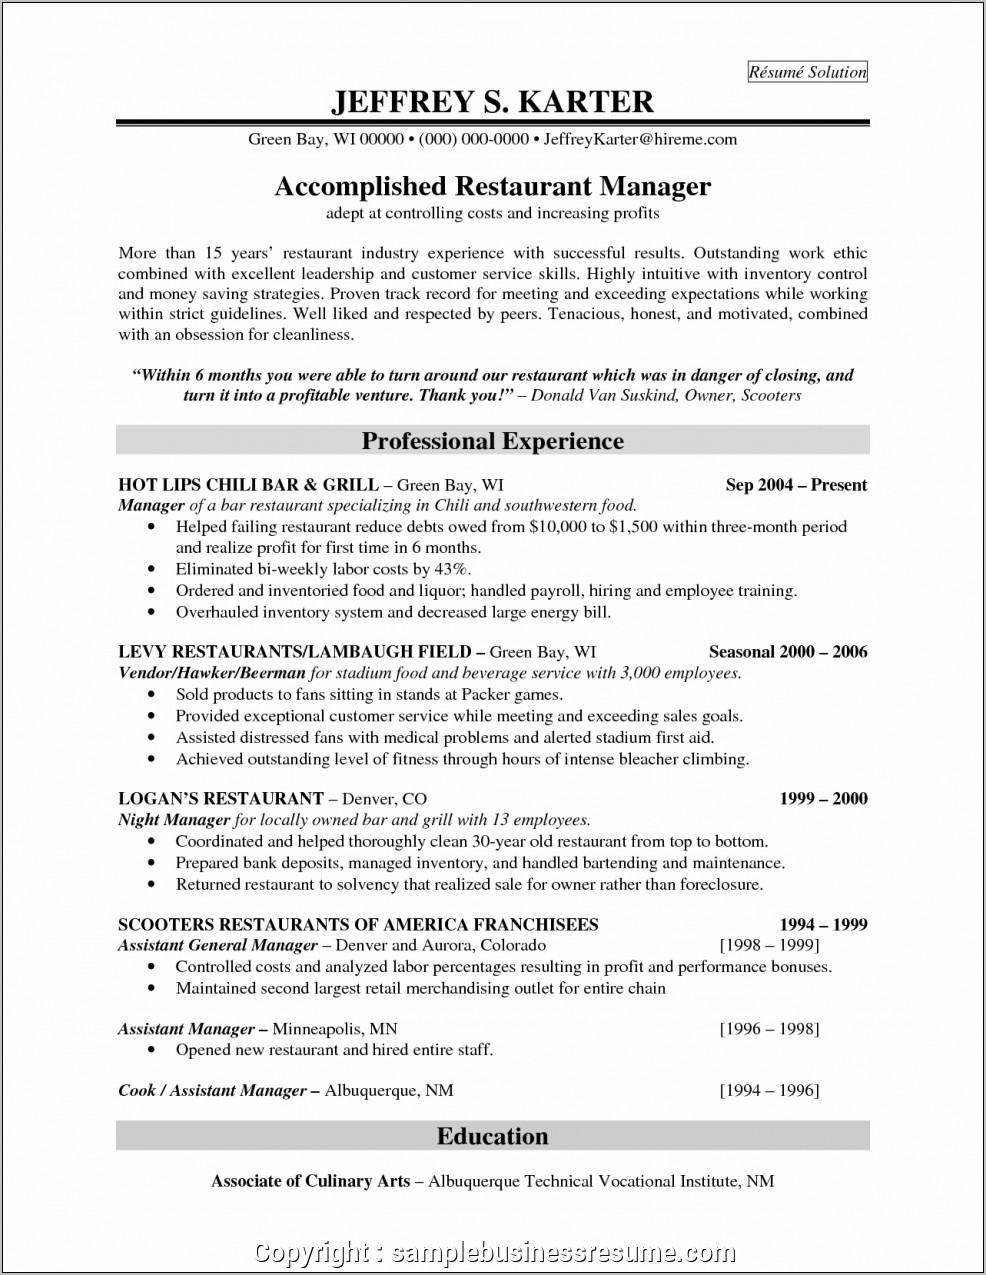 Resume Format For Assistant Restaurant Manager